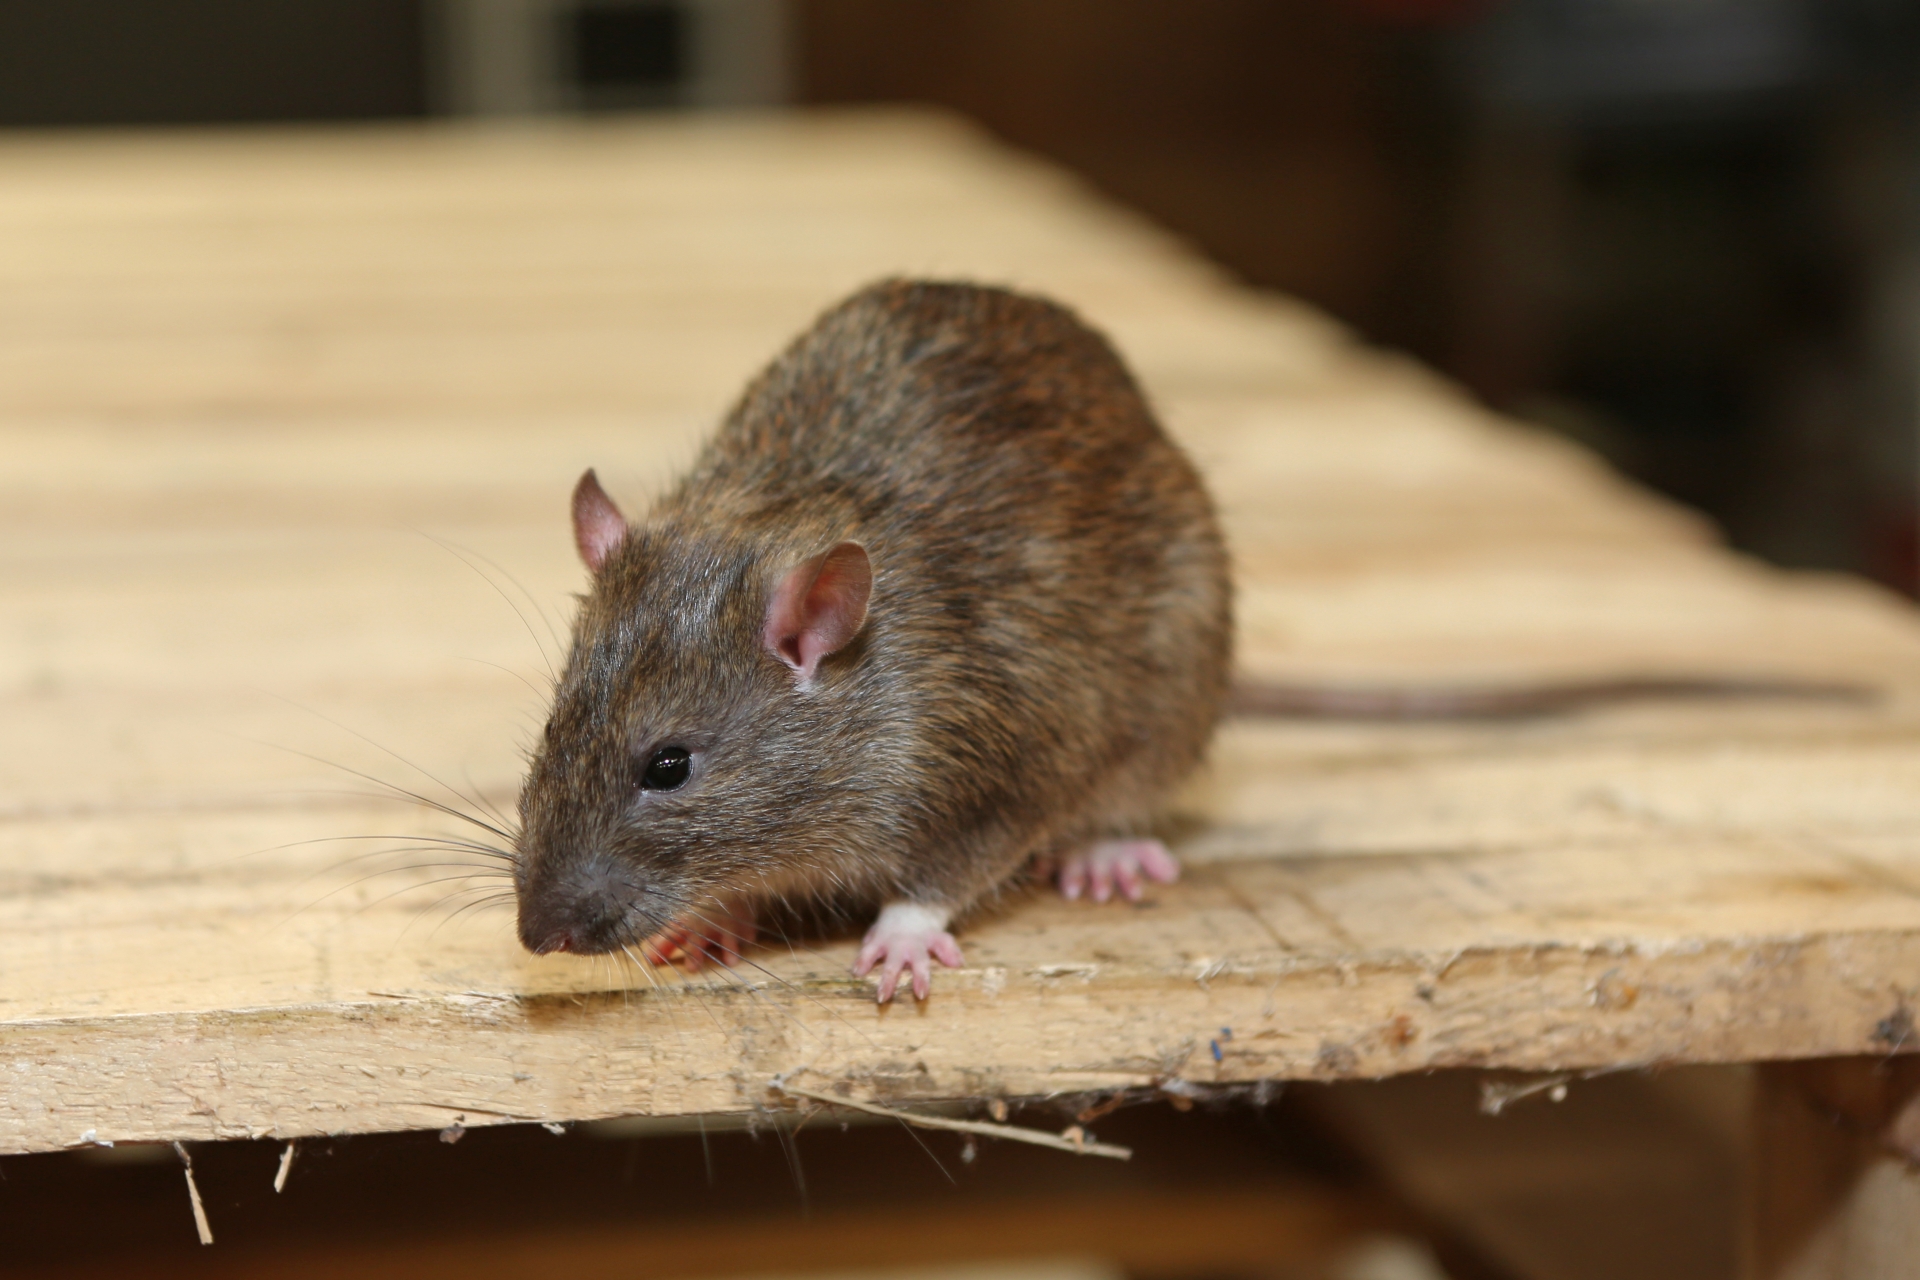 Rat extermination, Pest Control in Ladbroke Grove, North Kensington, W10. Call Now 020 8166 9746